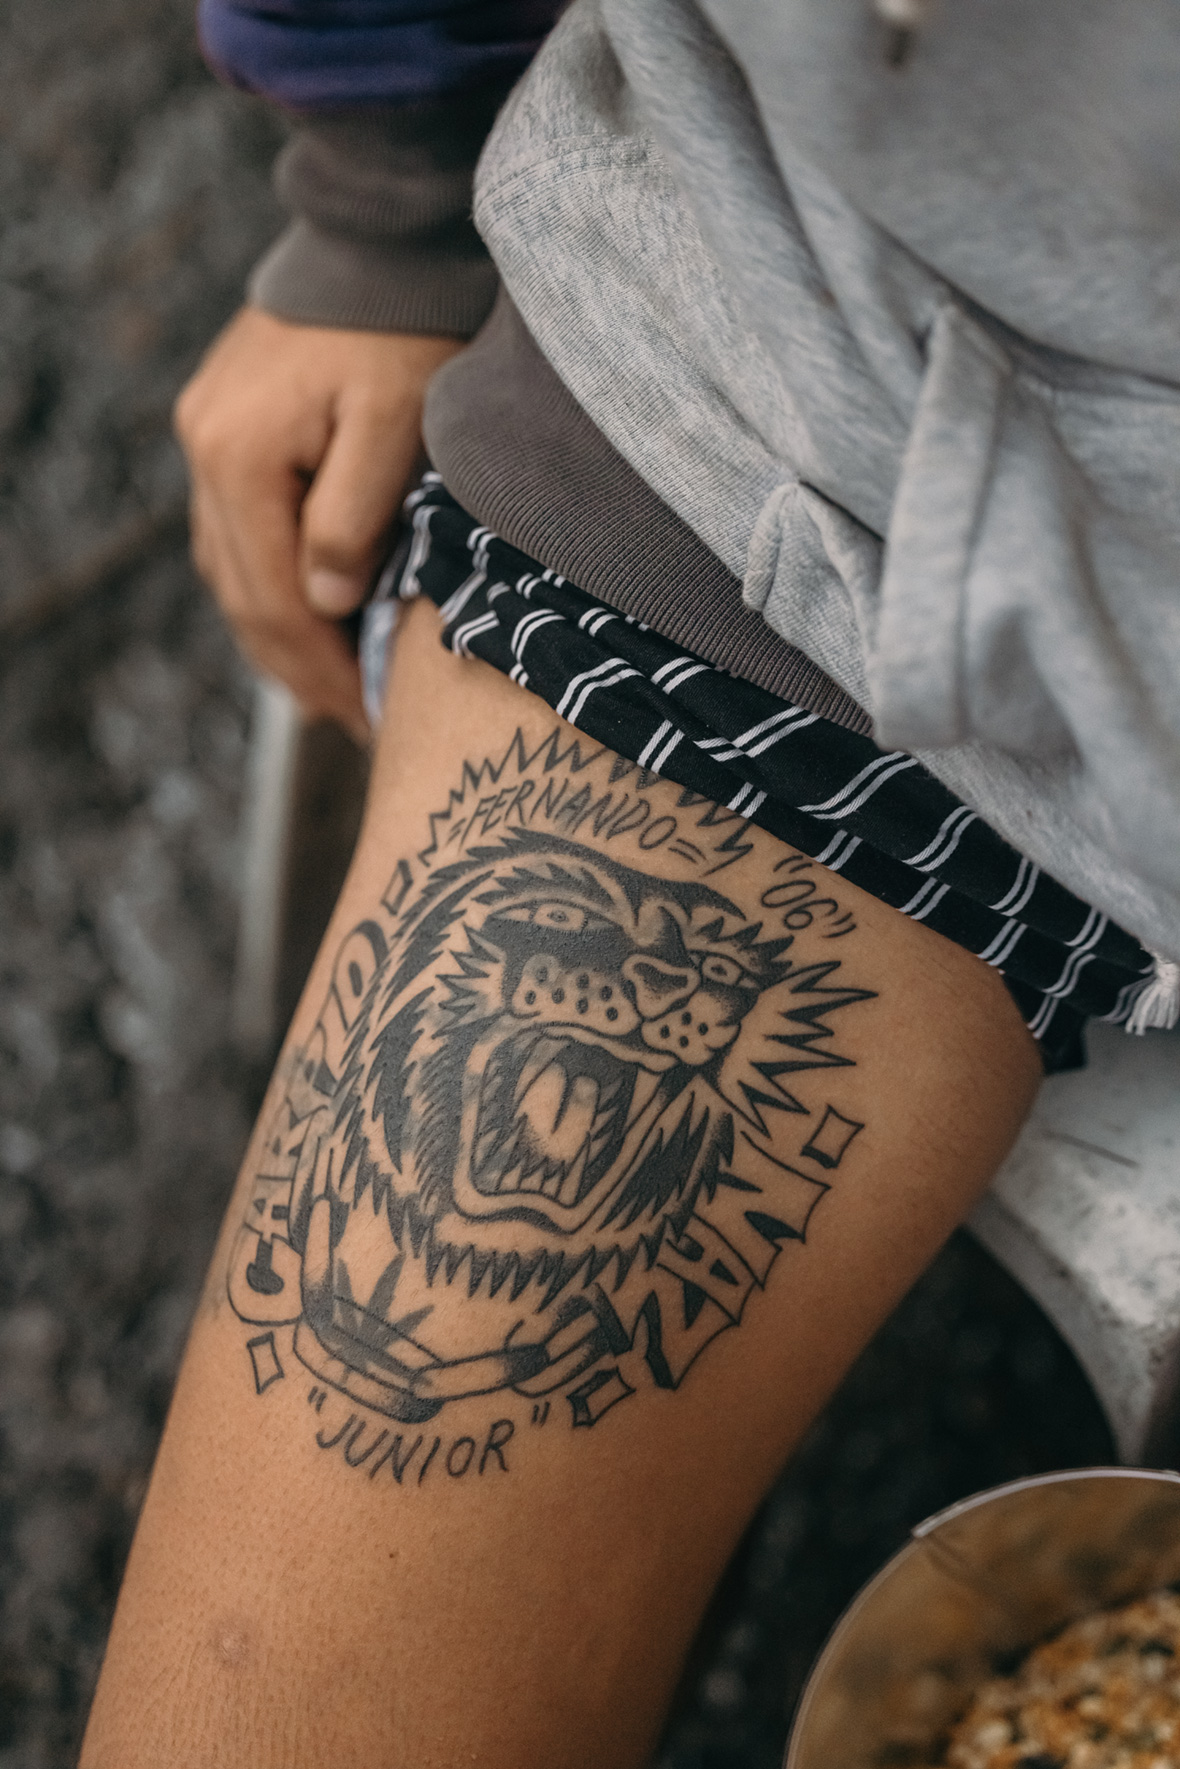 Russian Prison Tattoos | IMax